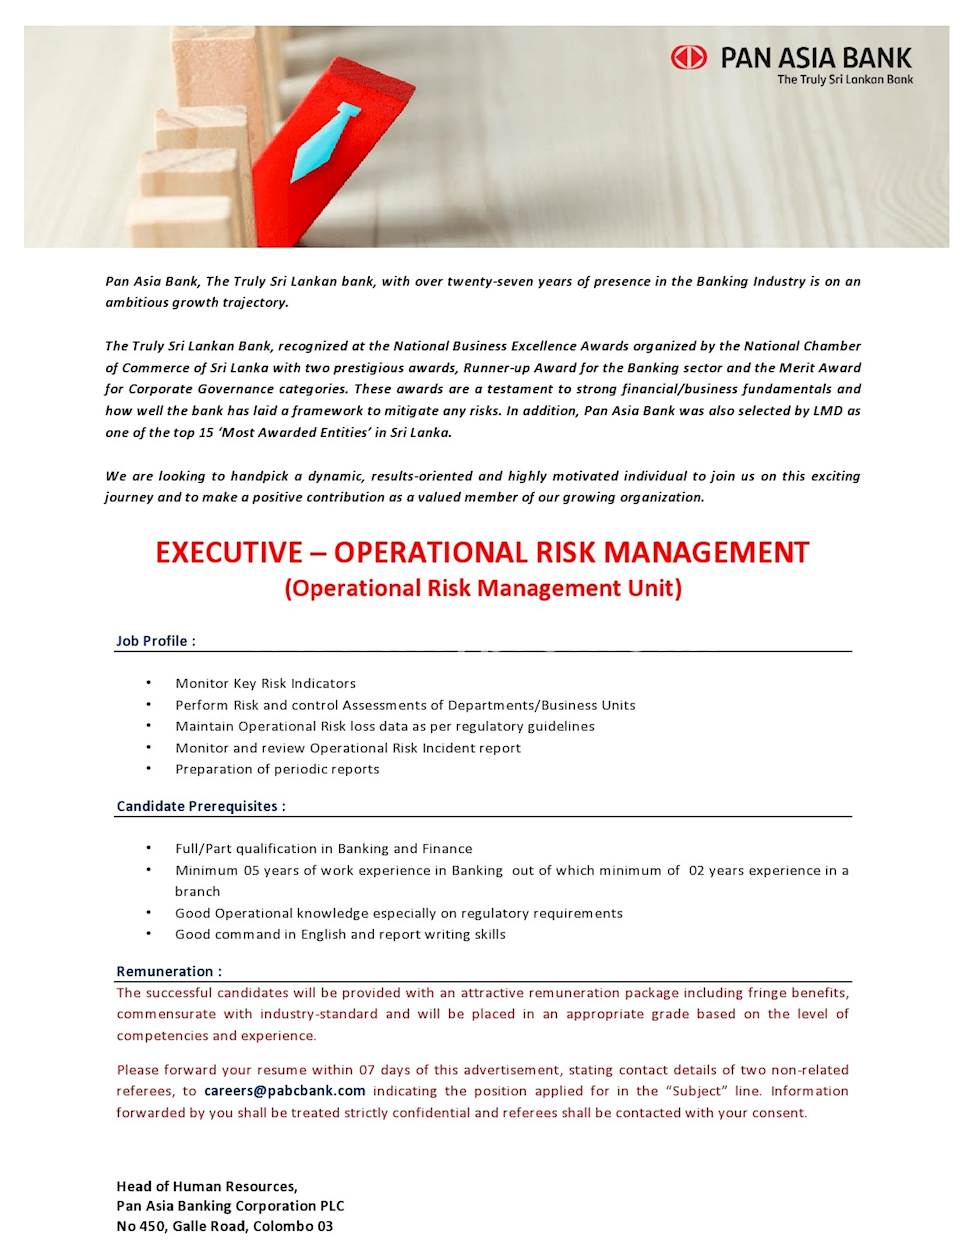 Executive - Operational Risk Management